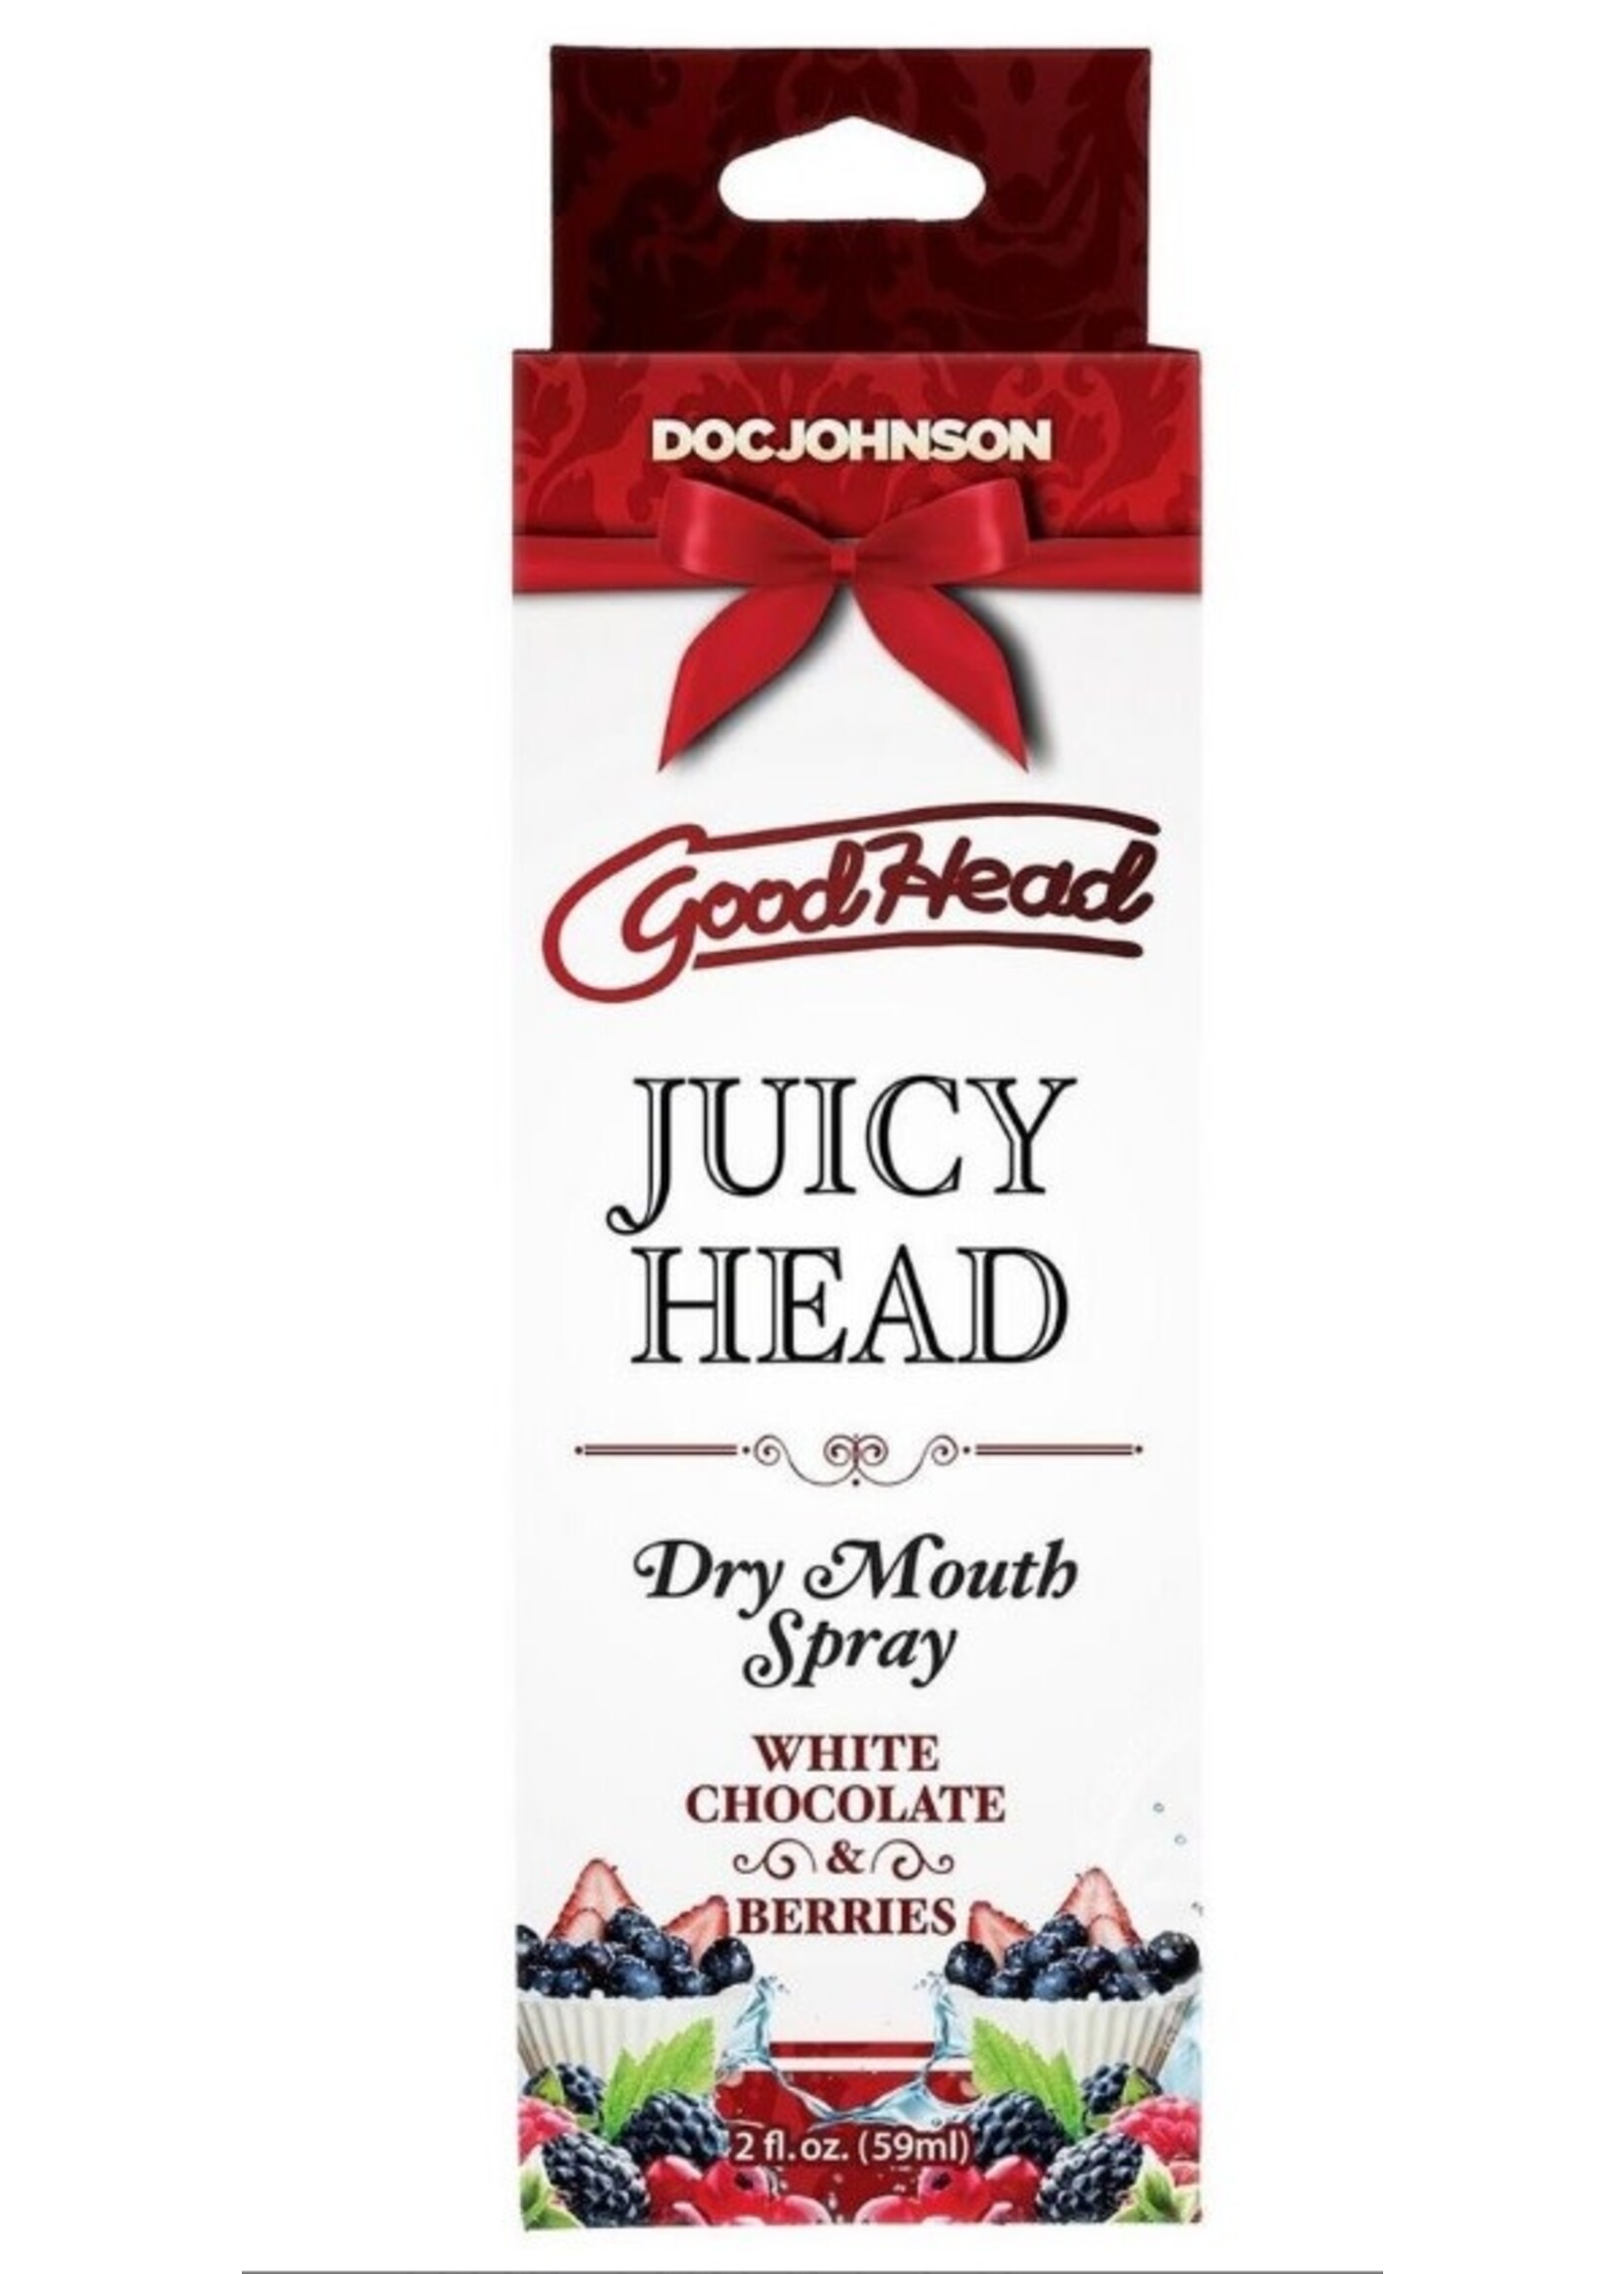 GoodHead Juicy Head Dry Mouth Spray - White Chocolate & Berries 2oz